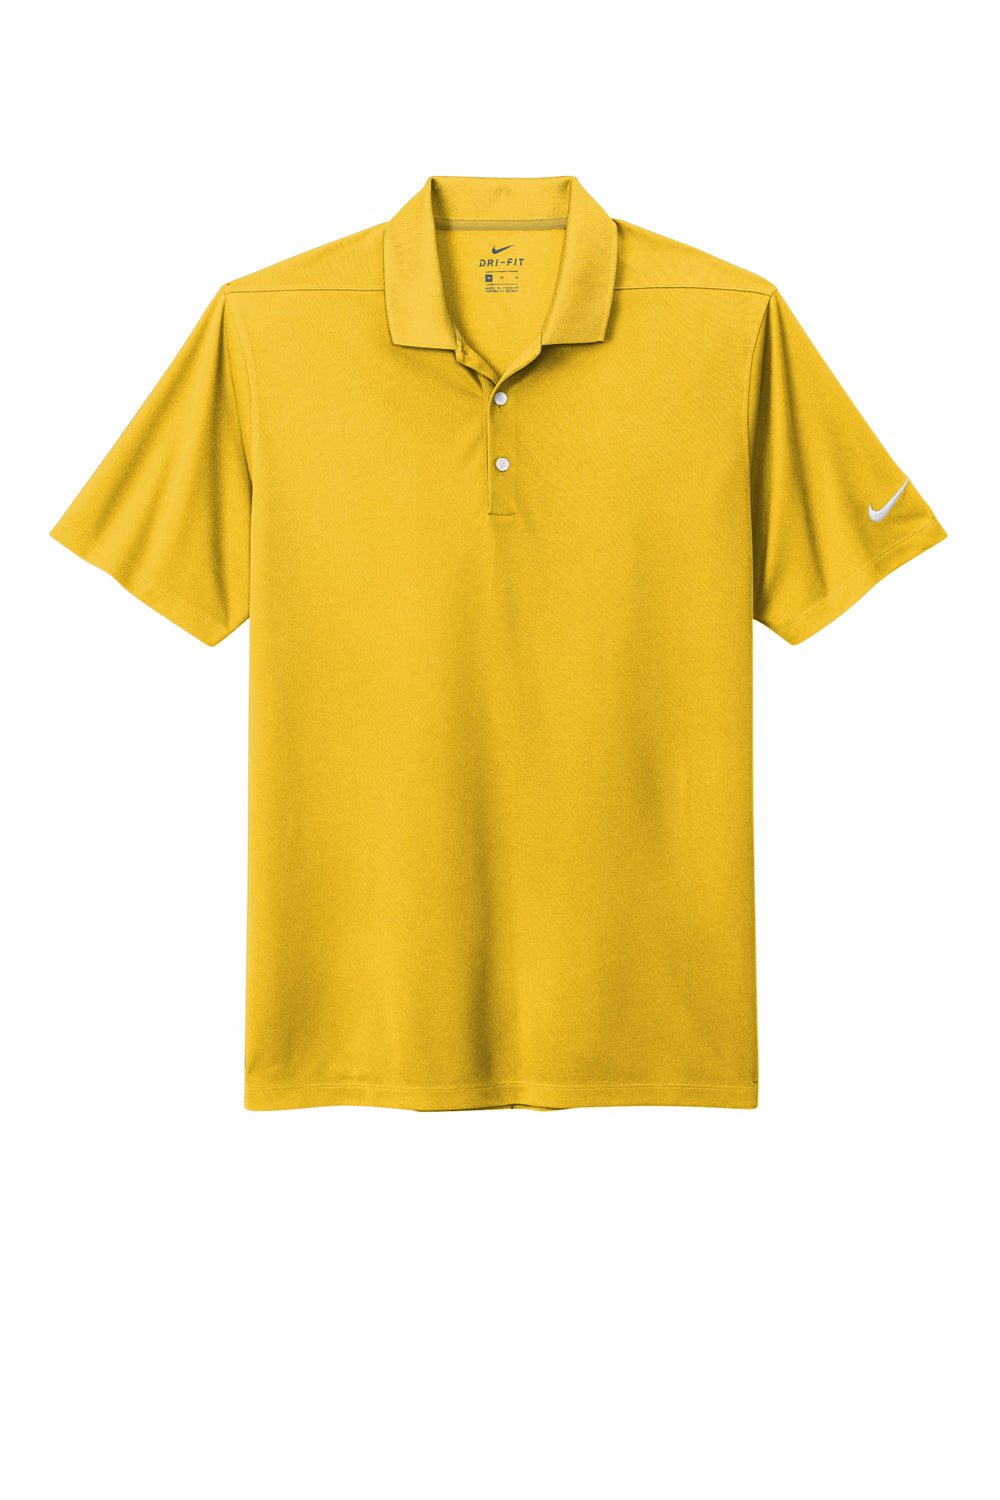 Nike NKDC1963 Mens Dri-Fit Moisture Wicking Micro Pique 2.0 Short Sleeve Polo Shirt Varsity Maize Yellow Flat Front